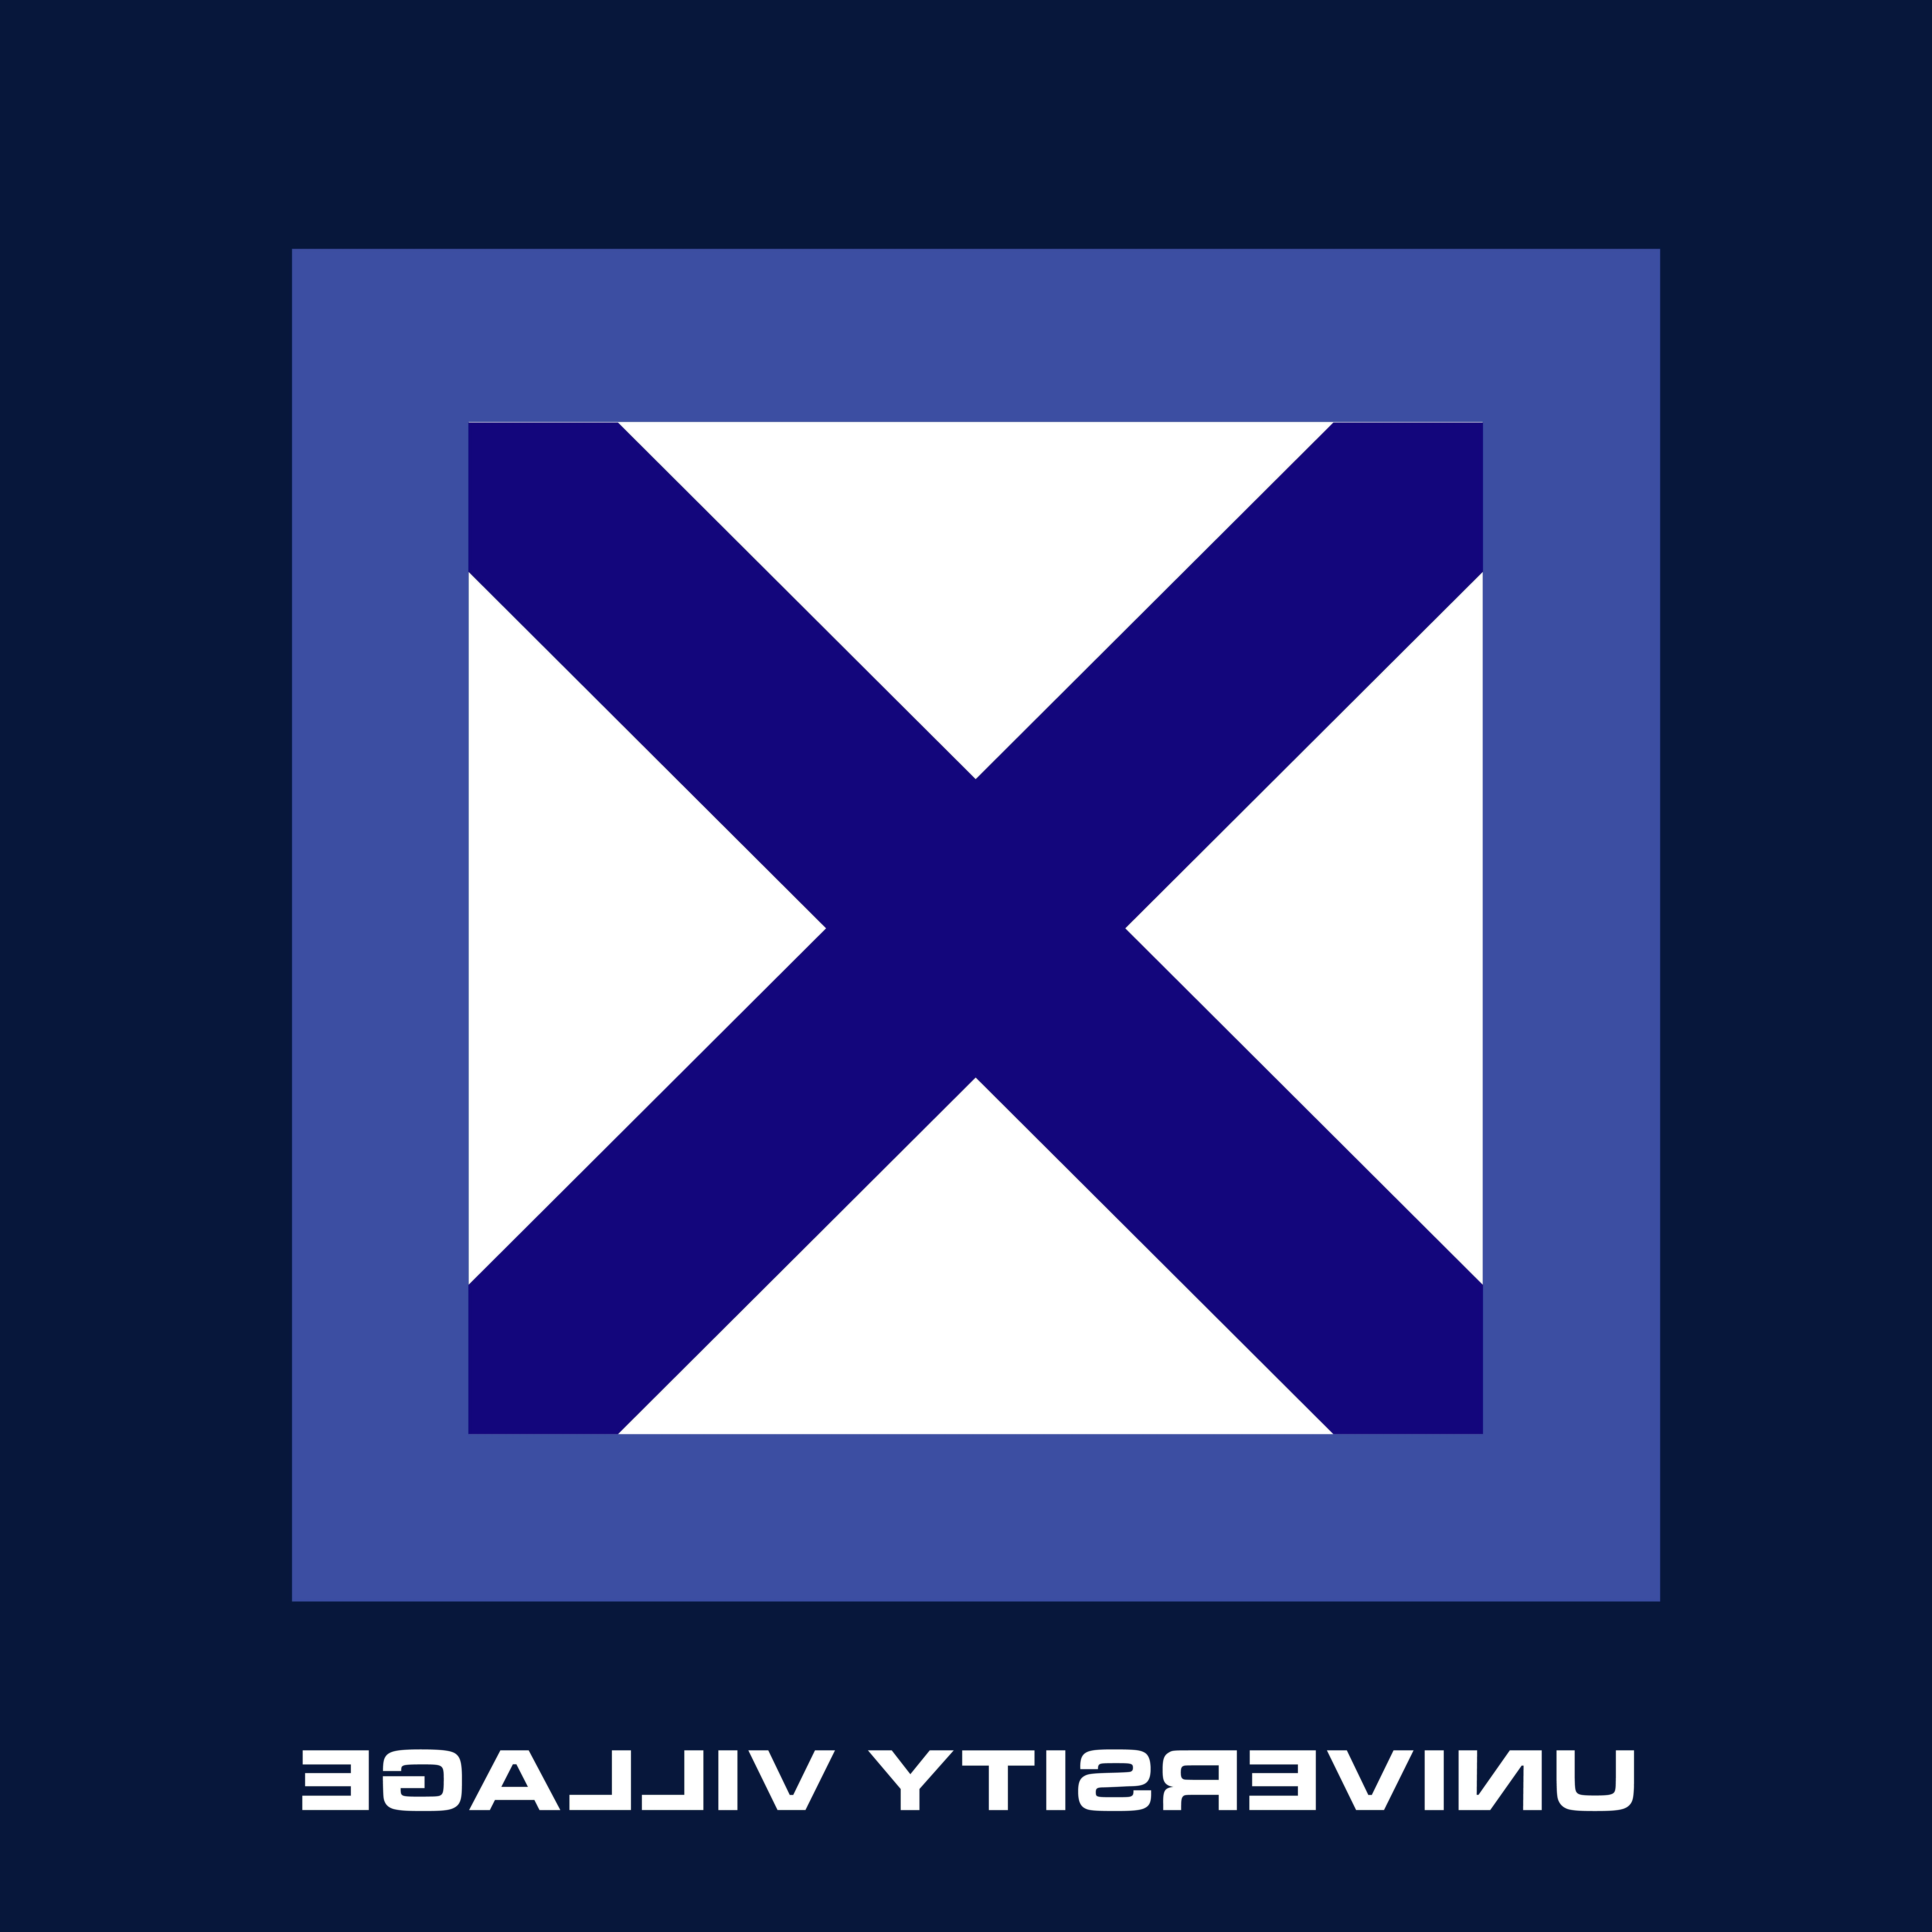 The Village Flag